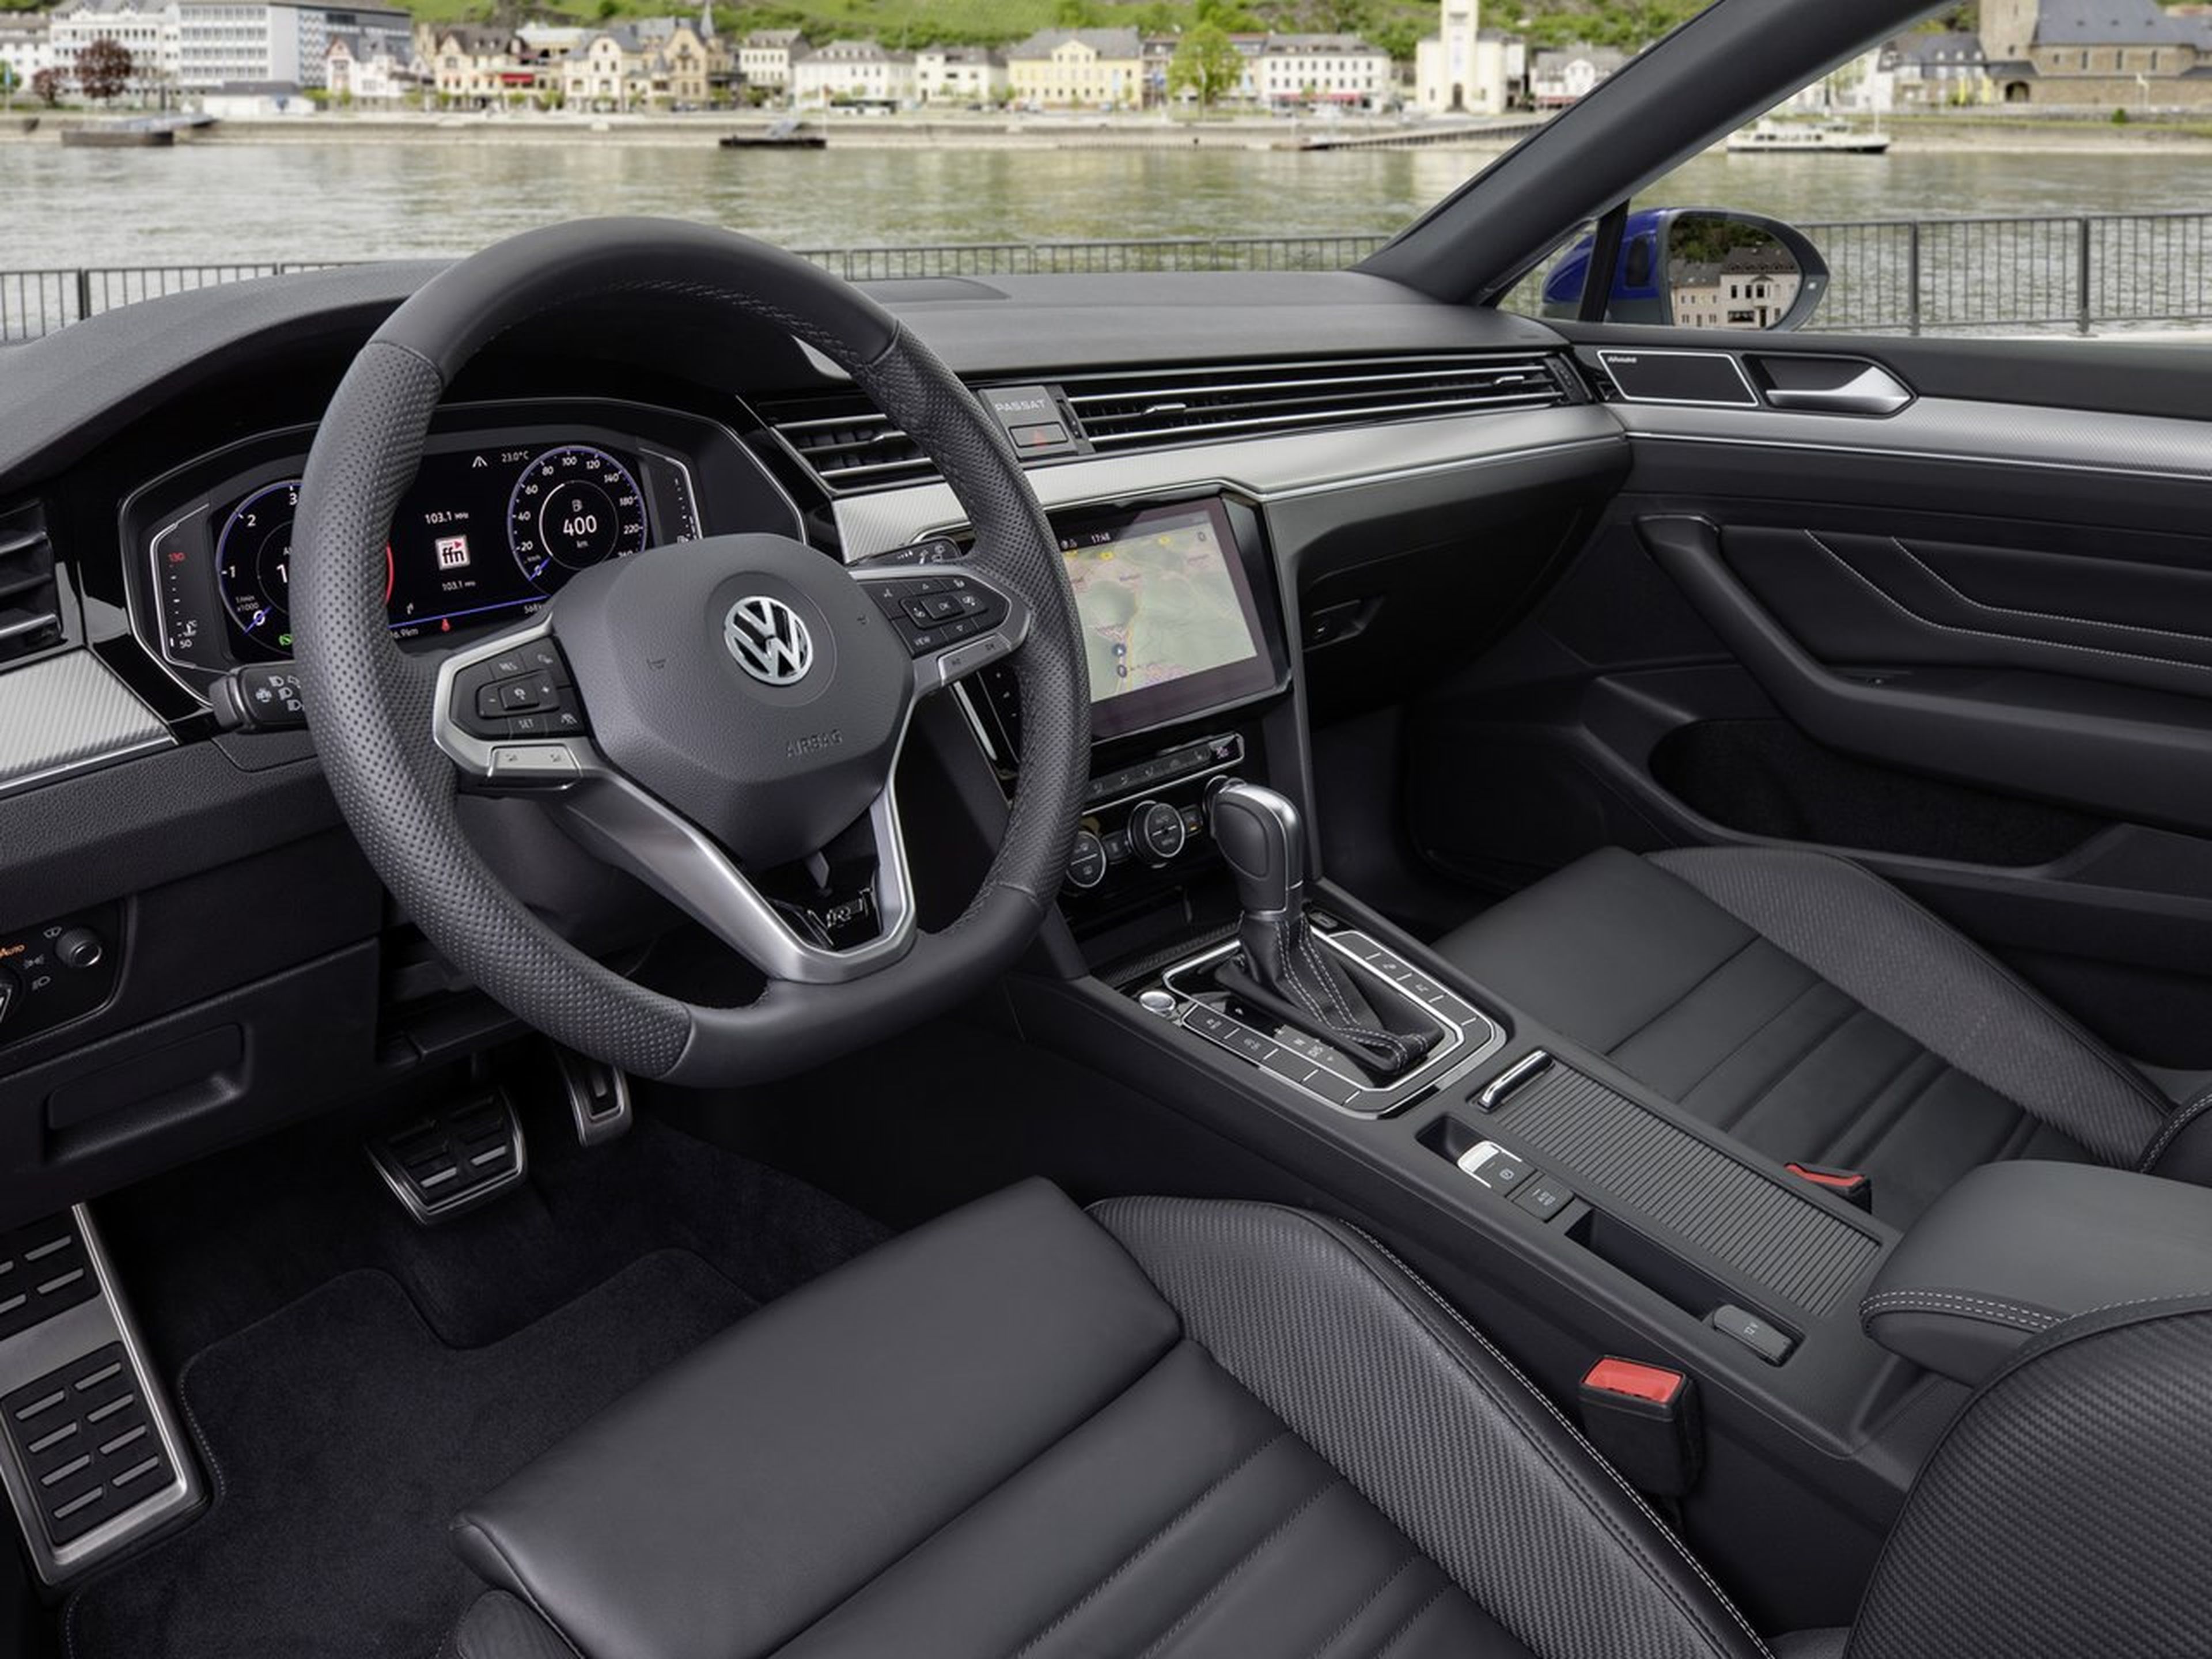 Volkswagen Passat Variant interior